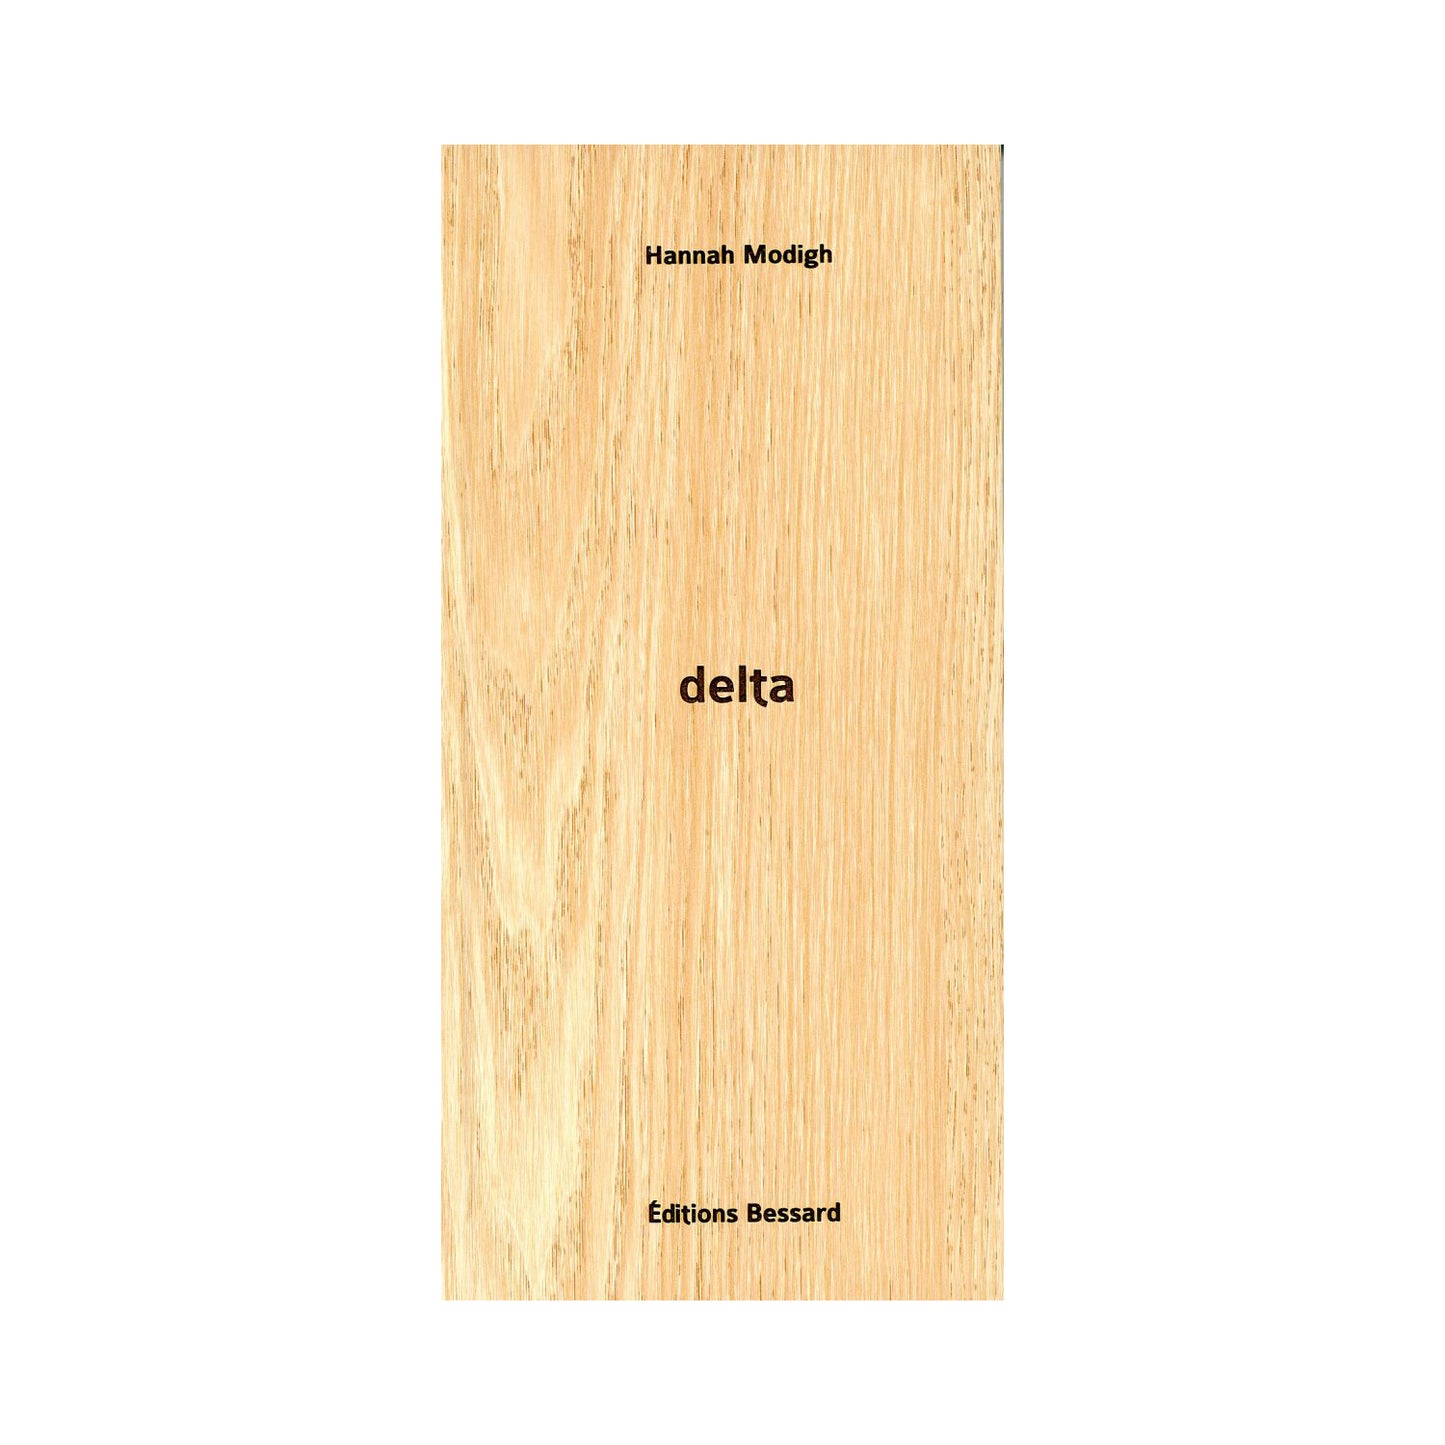 Delta by Hannah Modigh